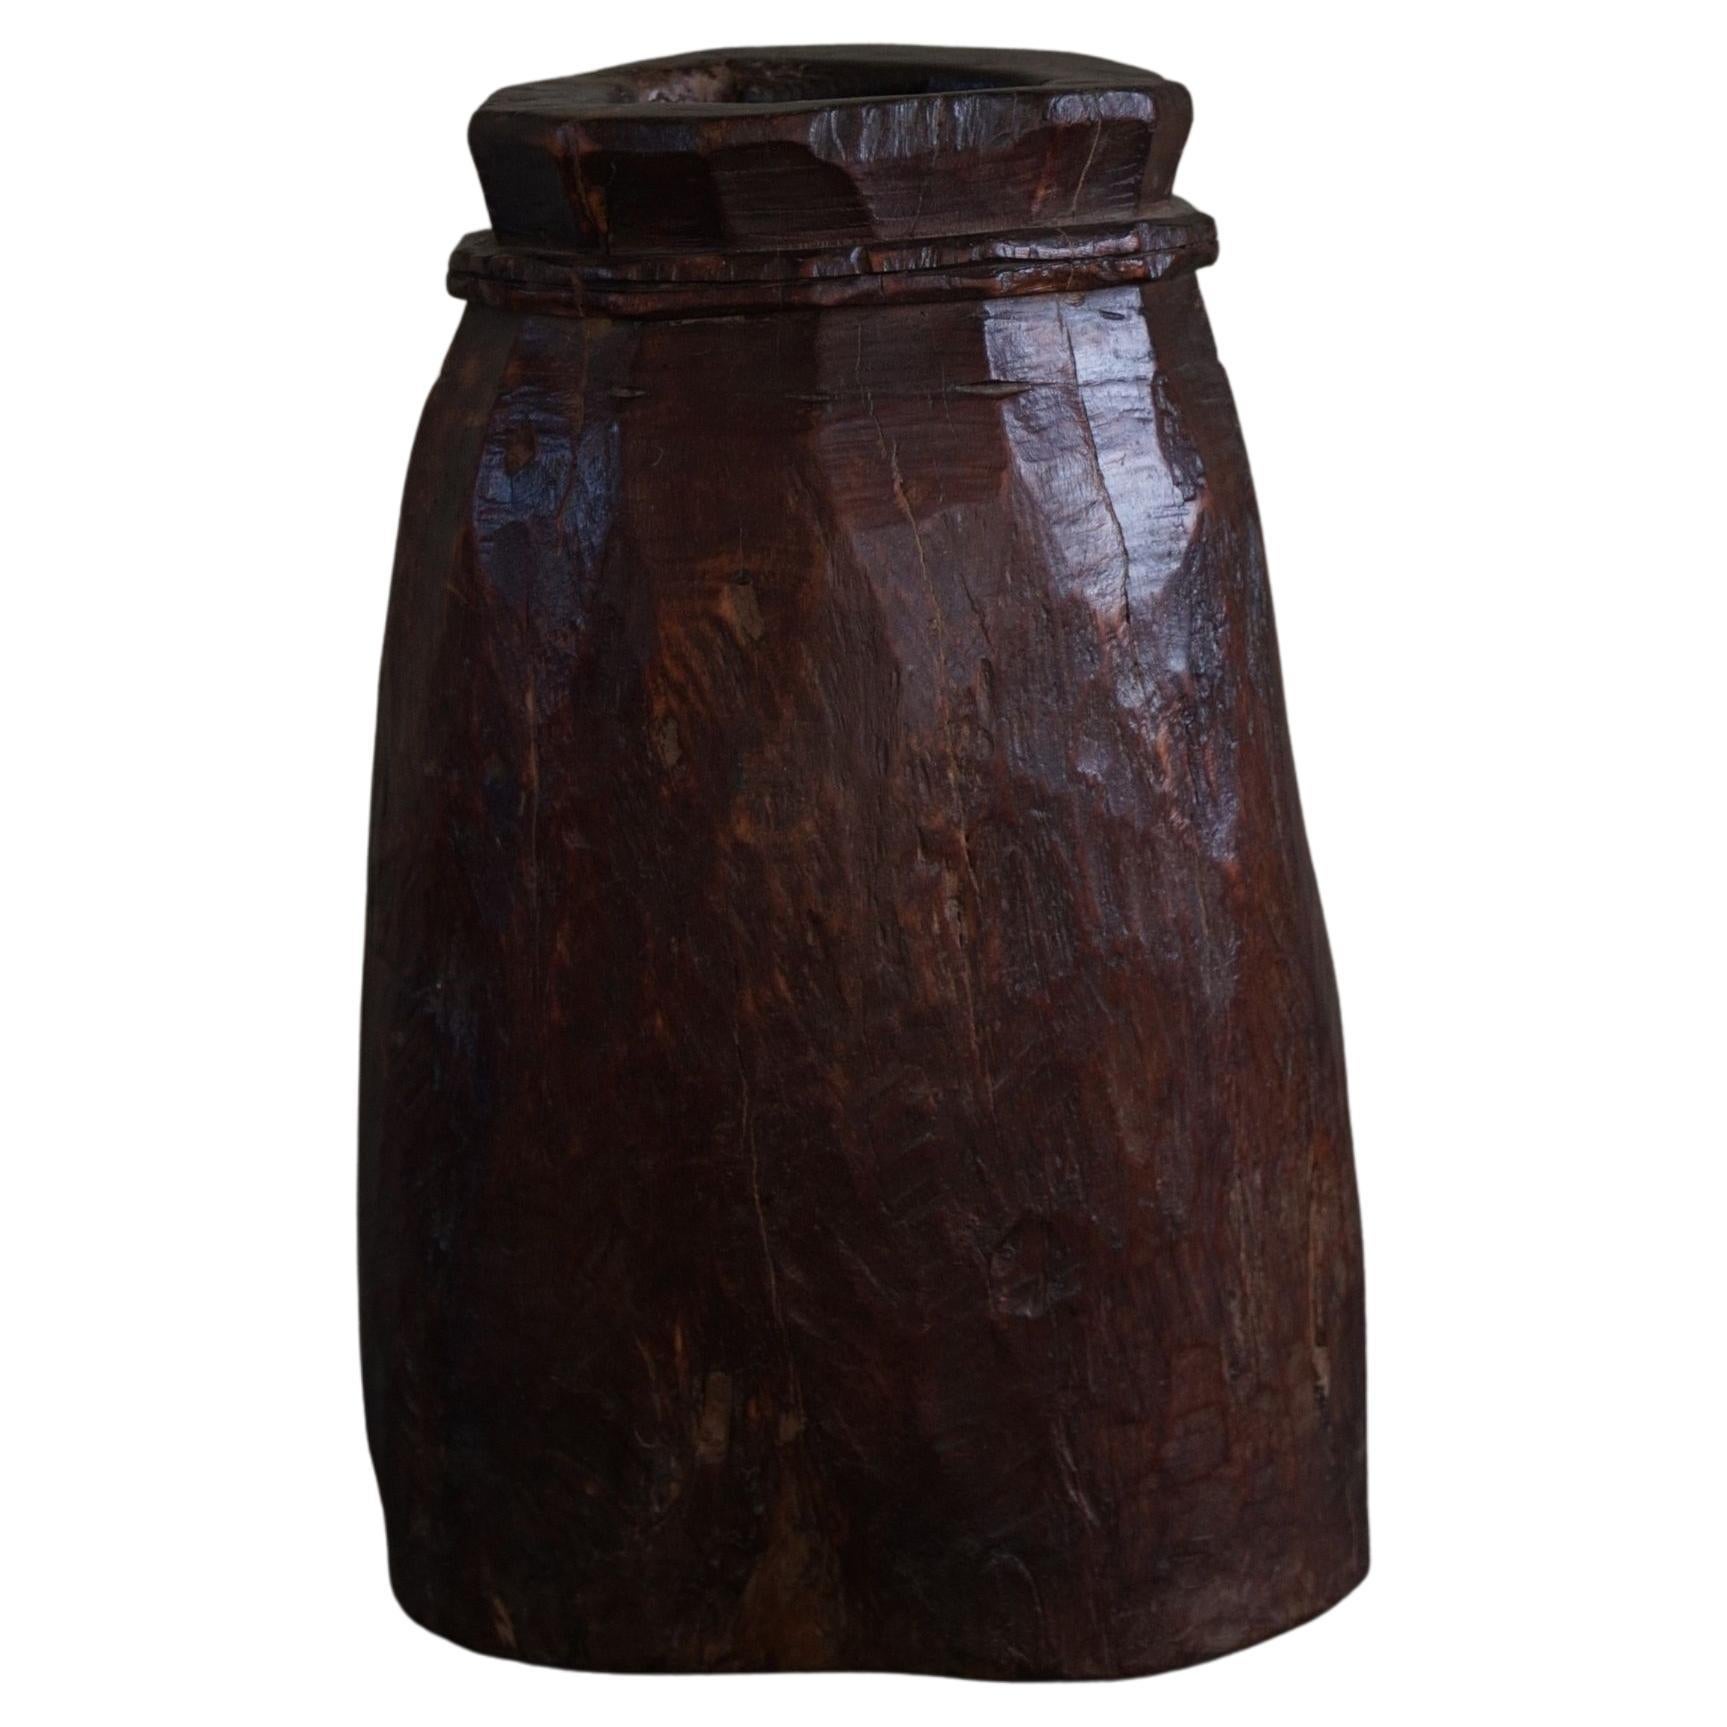 Primitive Organic Wooden Naga Pot in Teak, Wabi Sabi Style, 20th Century For Sale